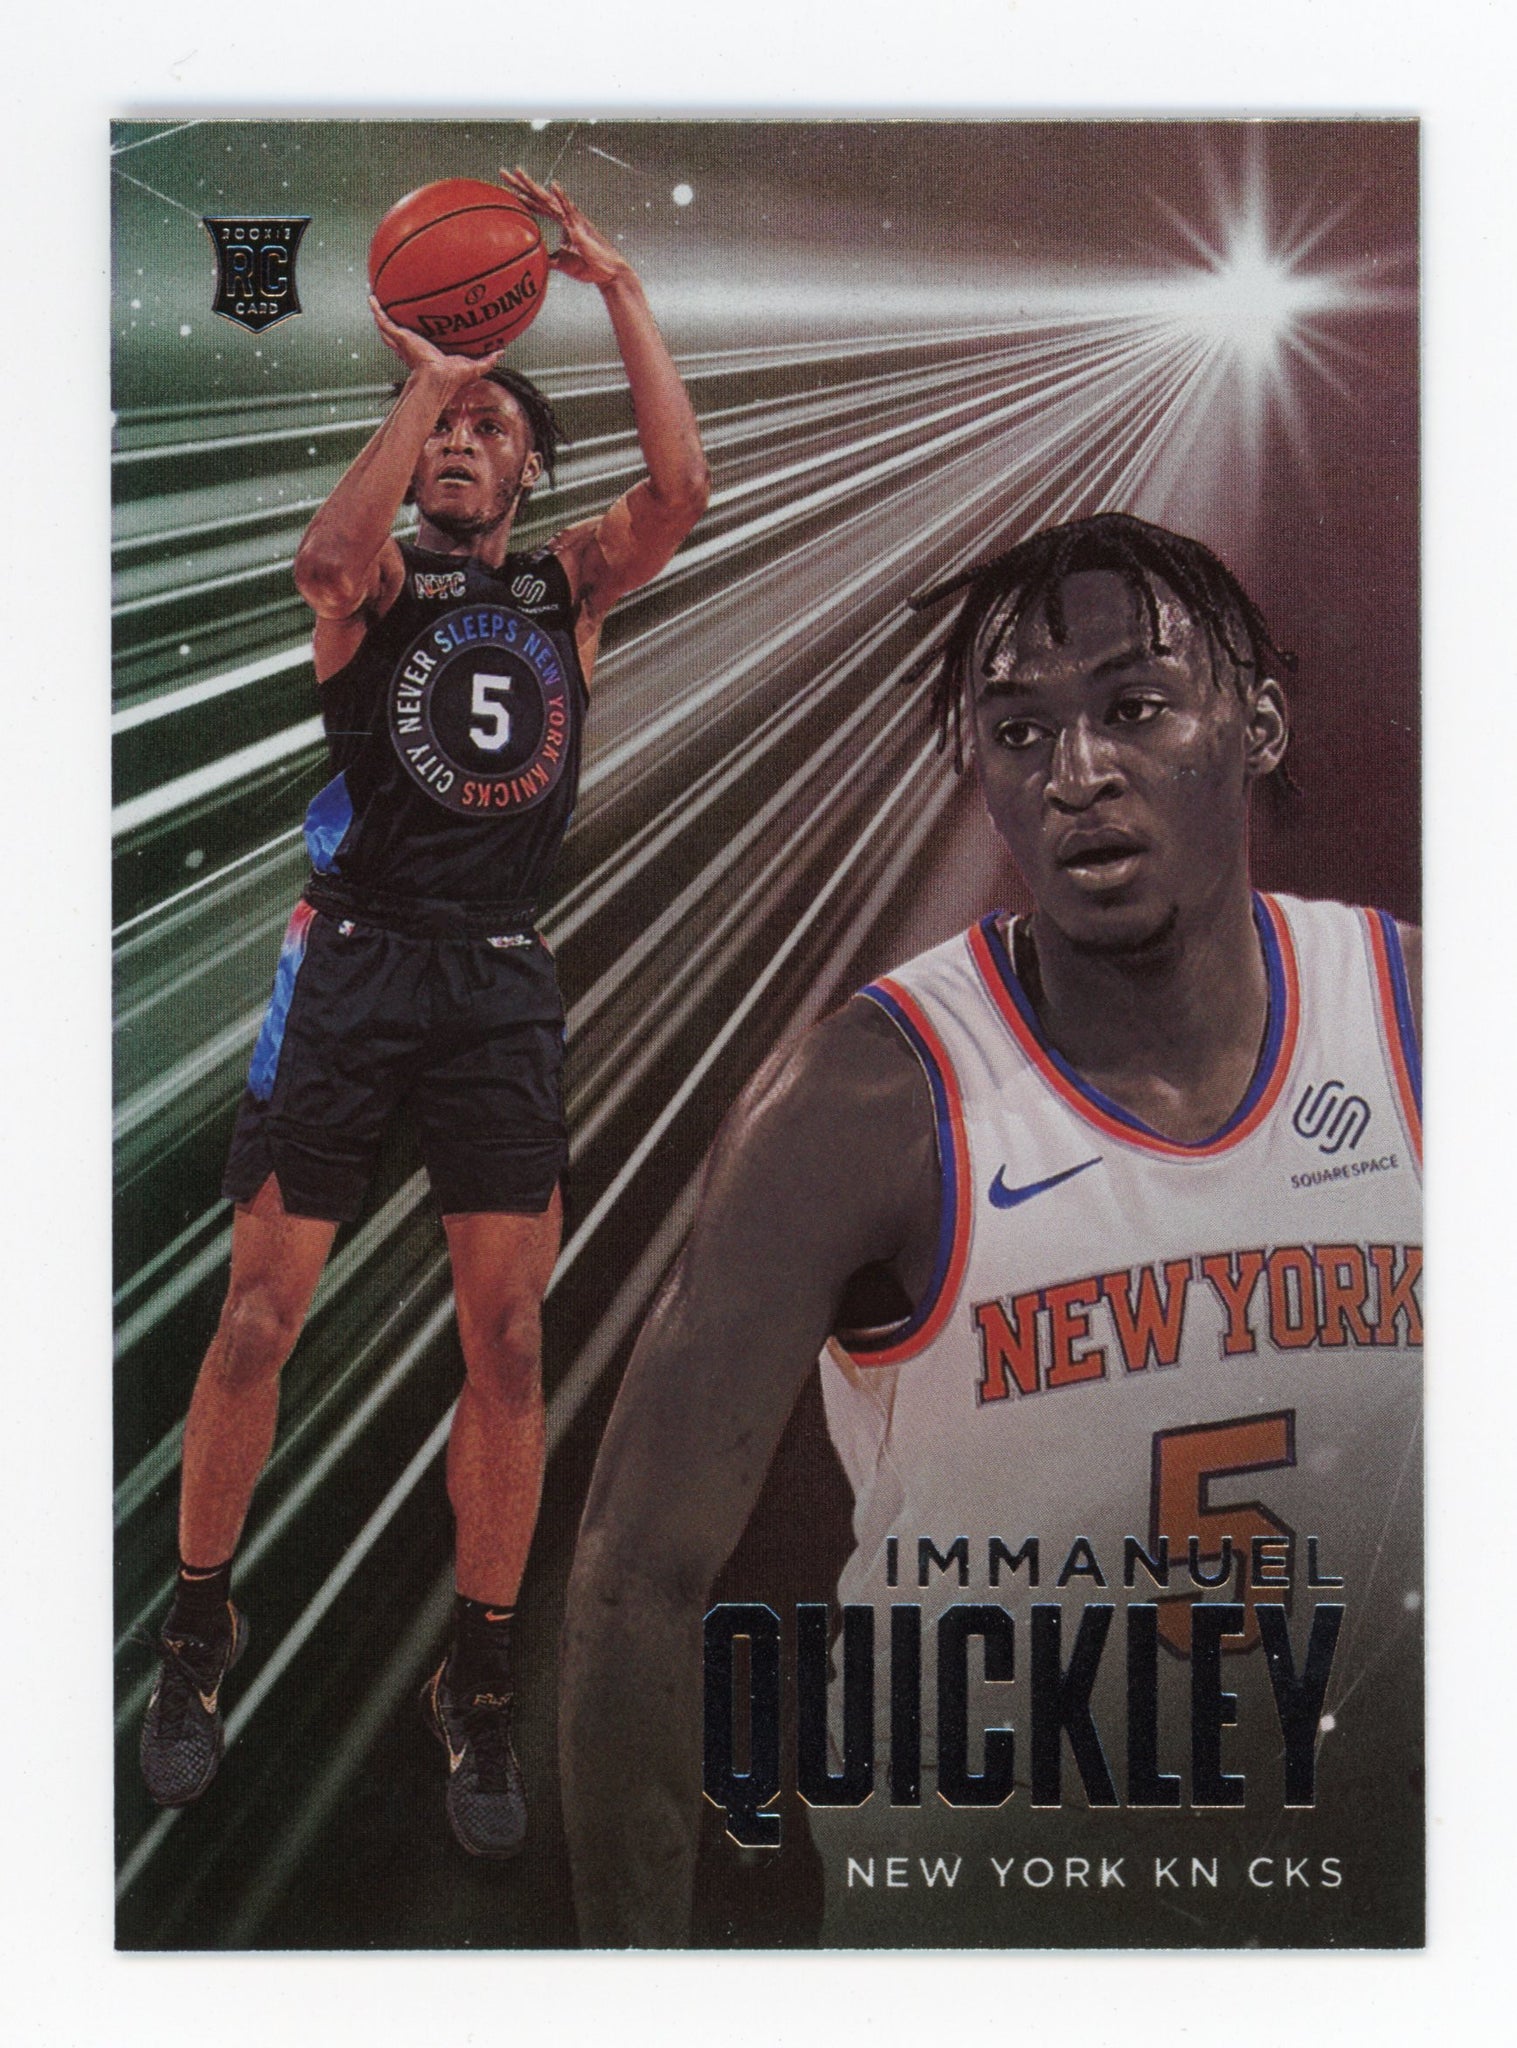 2020-2021 Immanuel Quickley Essentials Rookie Panini New York Knicks # 207